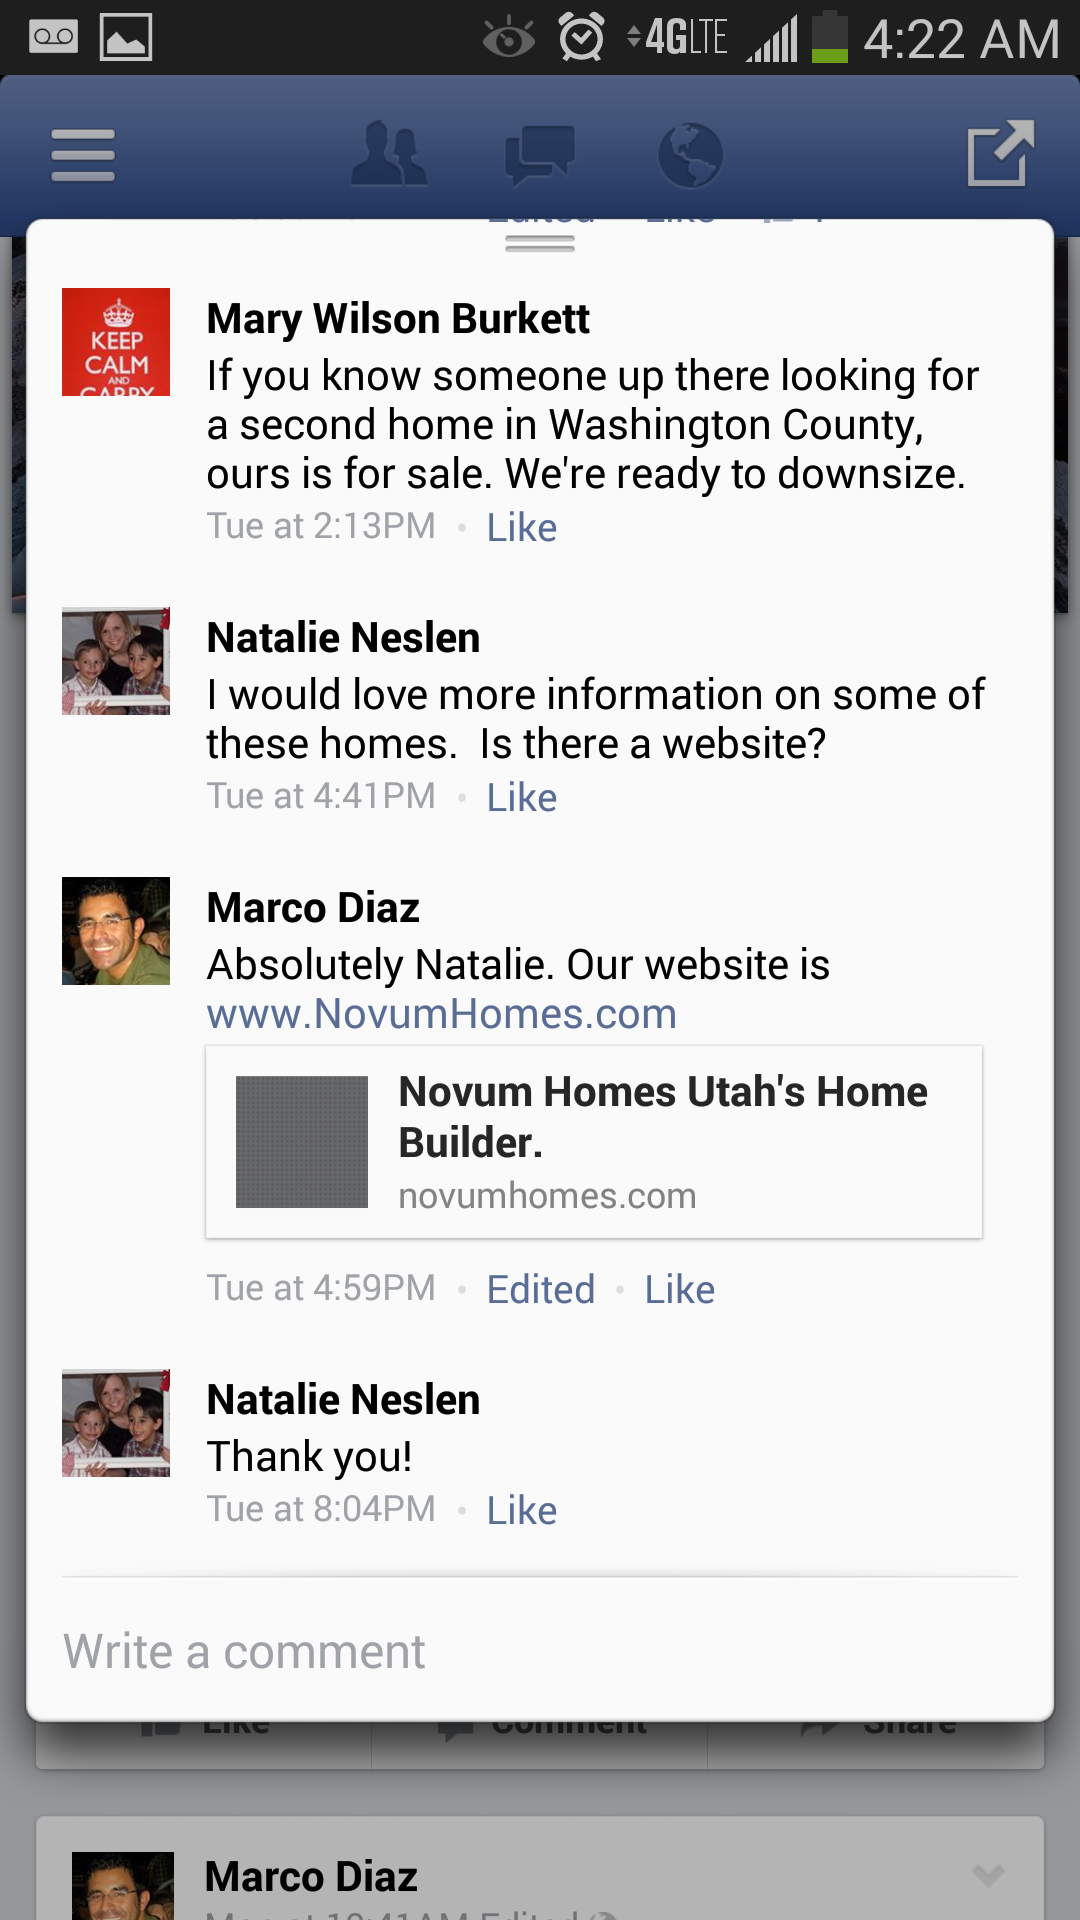 Marcos Diaz give Novum Homes website as his company site